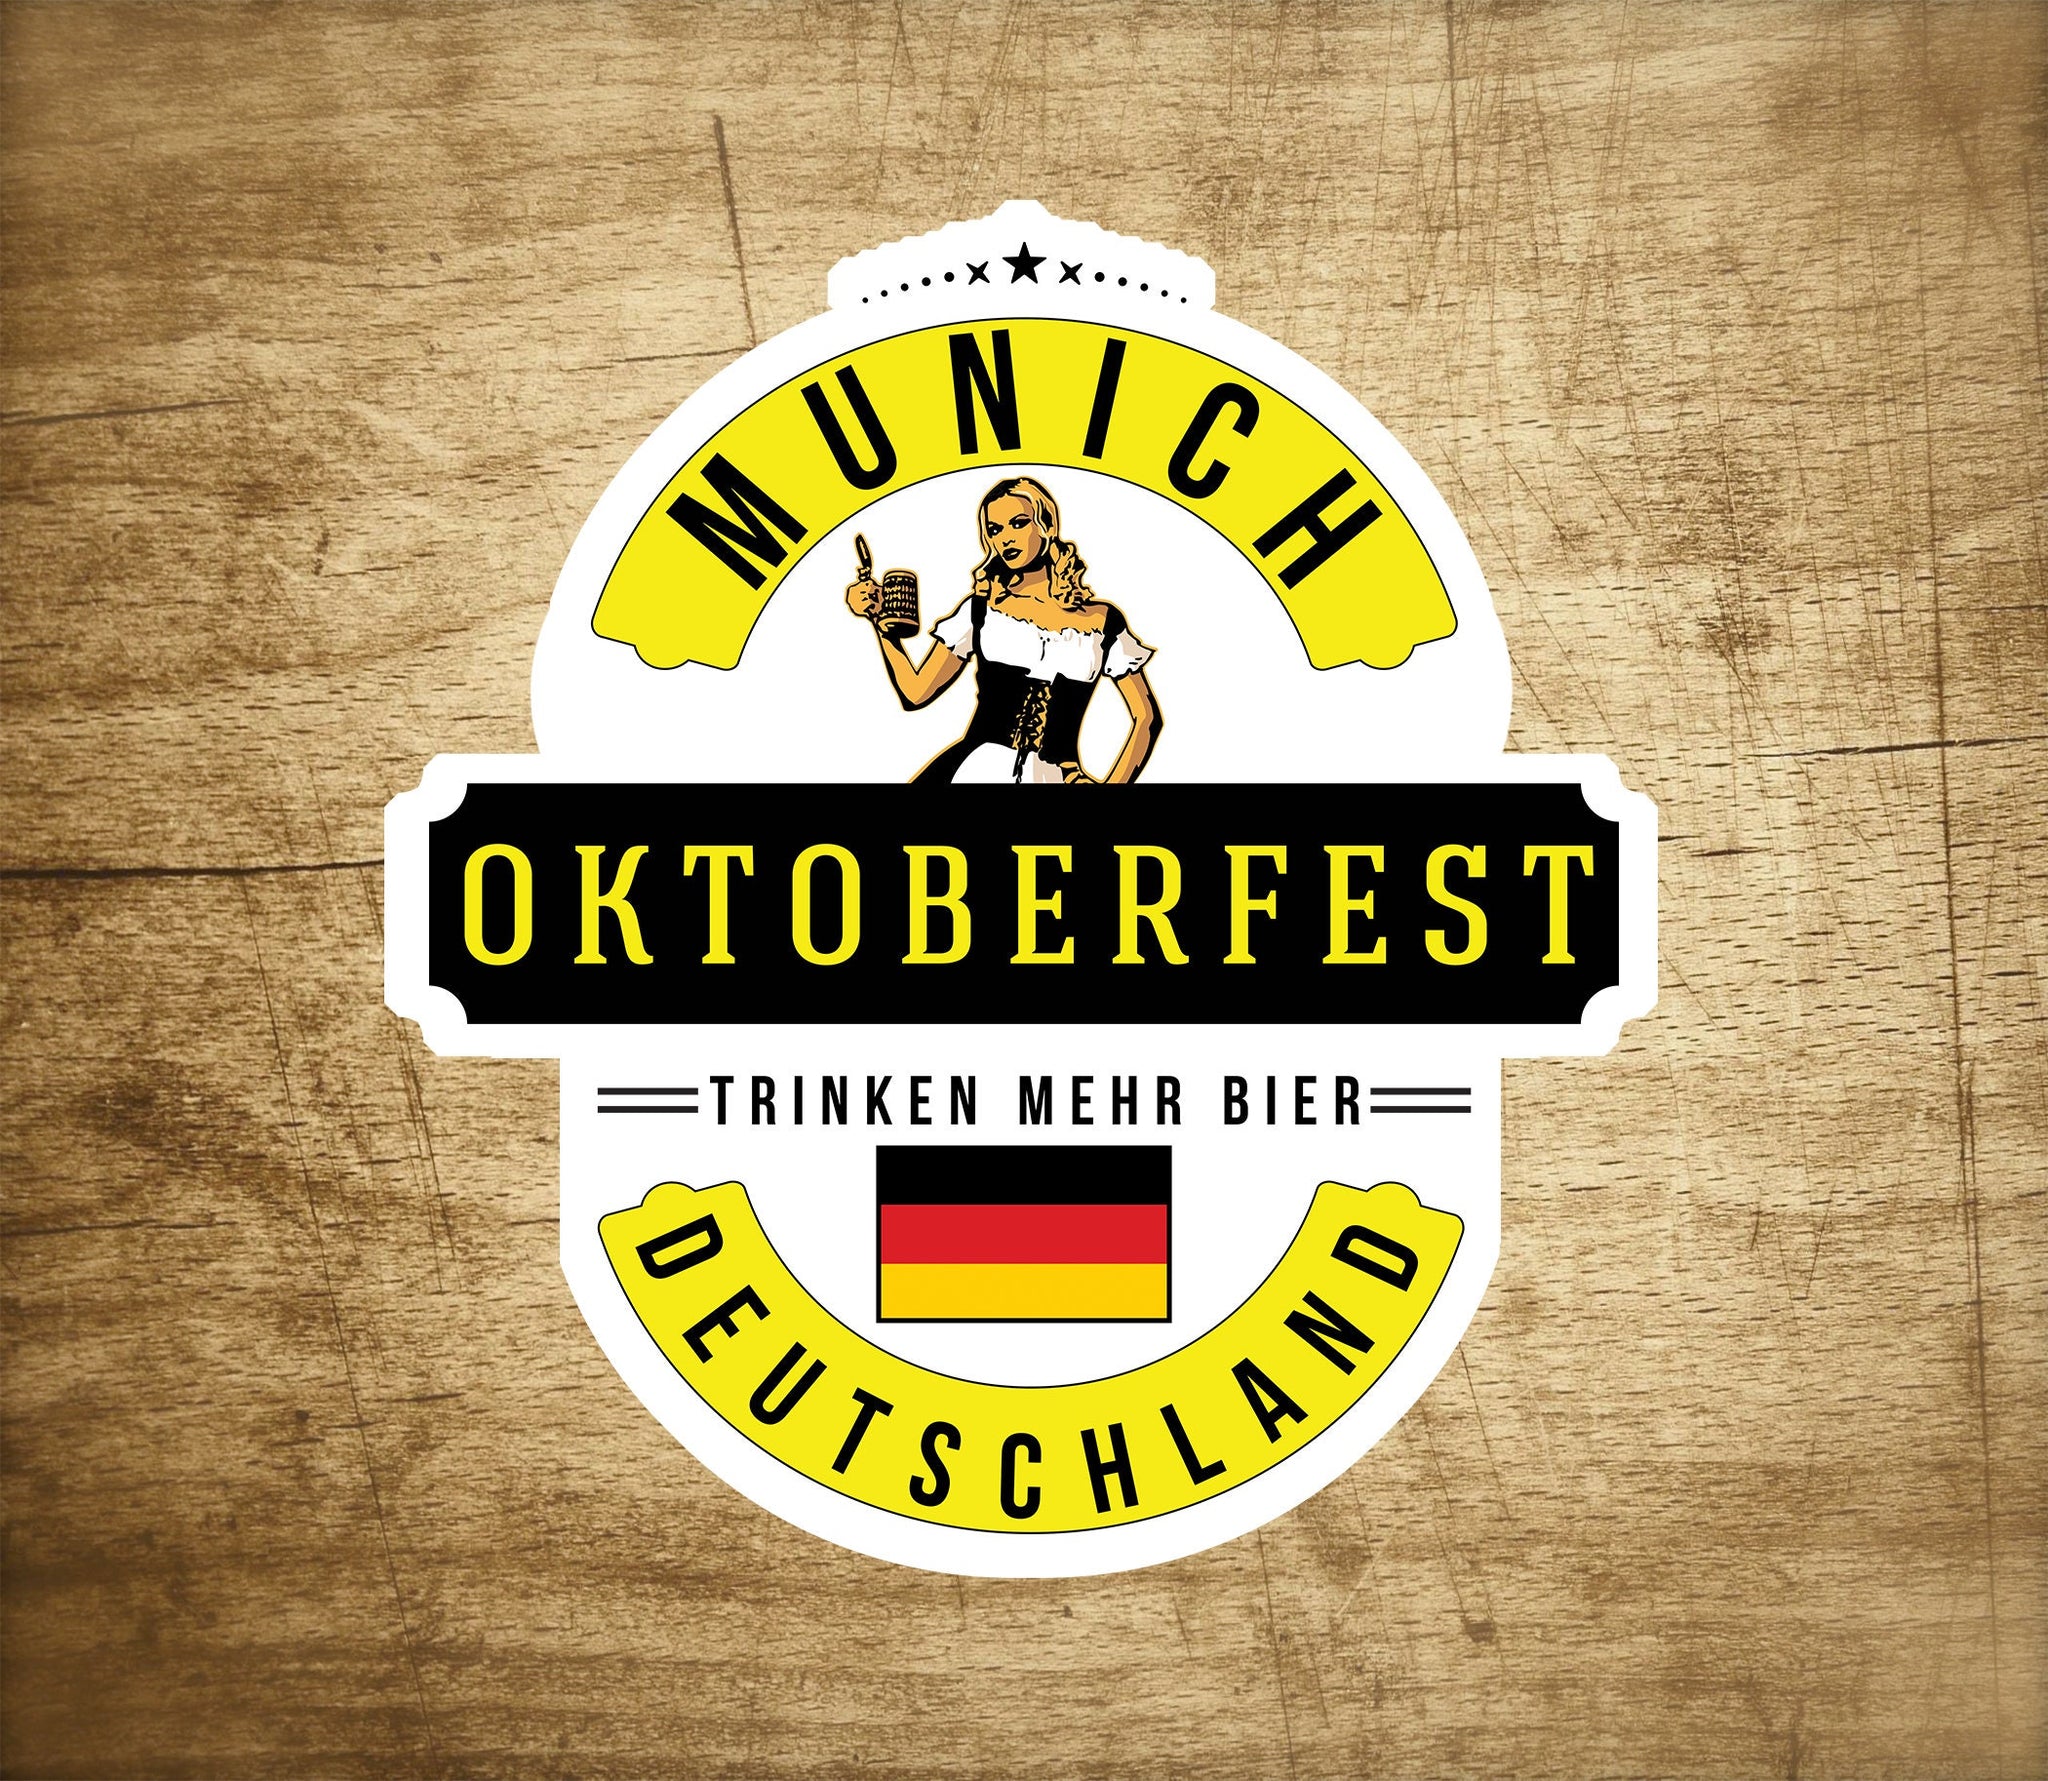 Oktoberfest Octoberfest Munchen Munich Decal Sticker 2.75" x 3" Germany